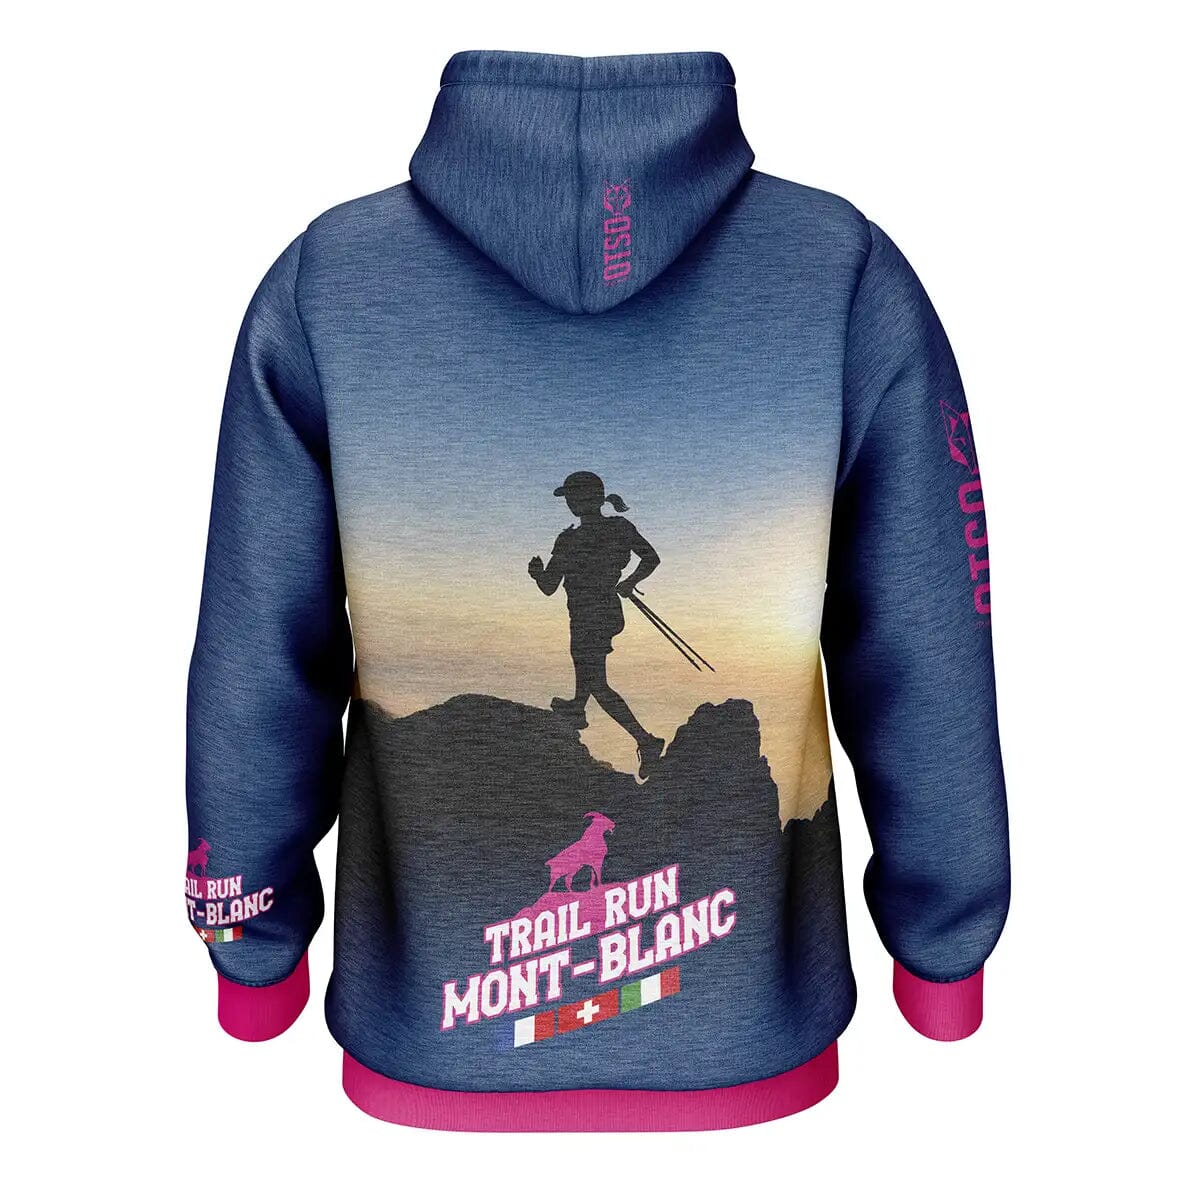 OTSO Women's Sweatshirt Trail Run Hoodie Montblanc Pink S 